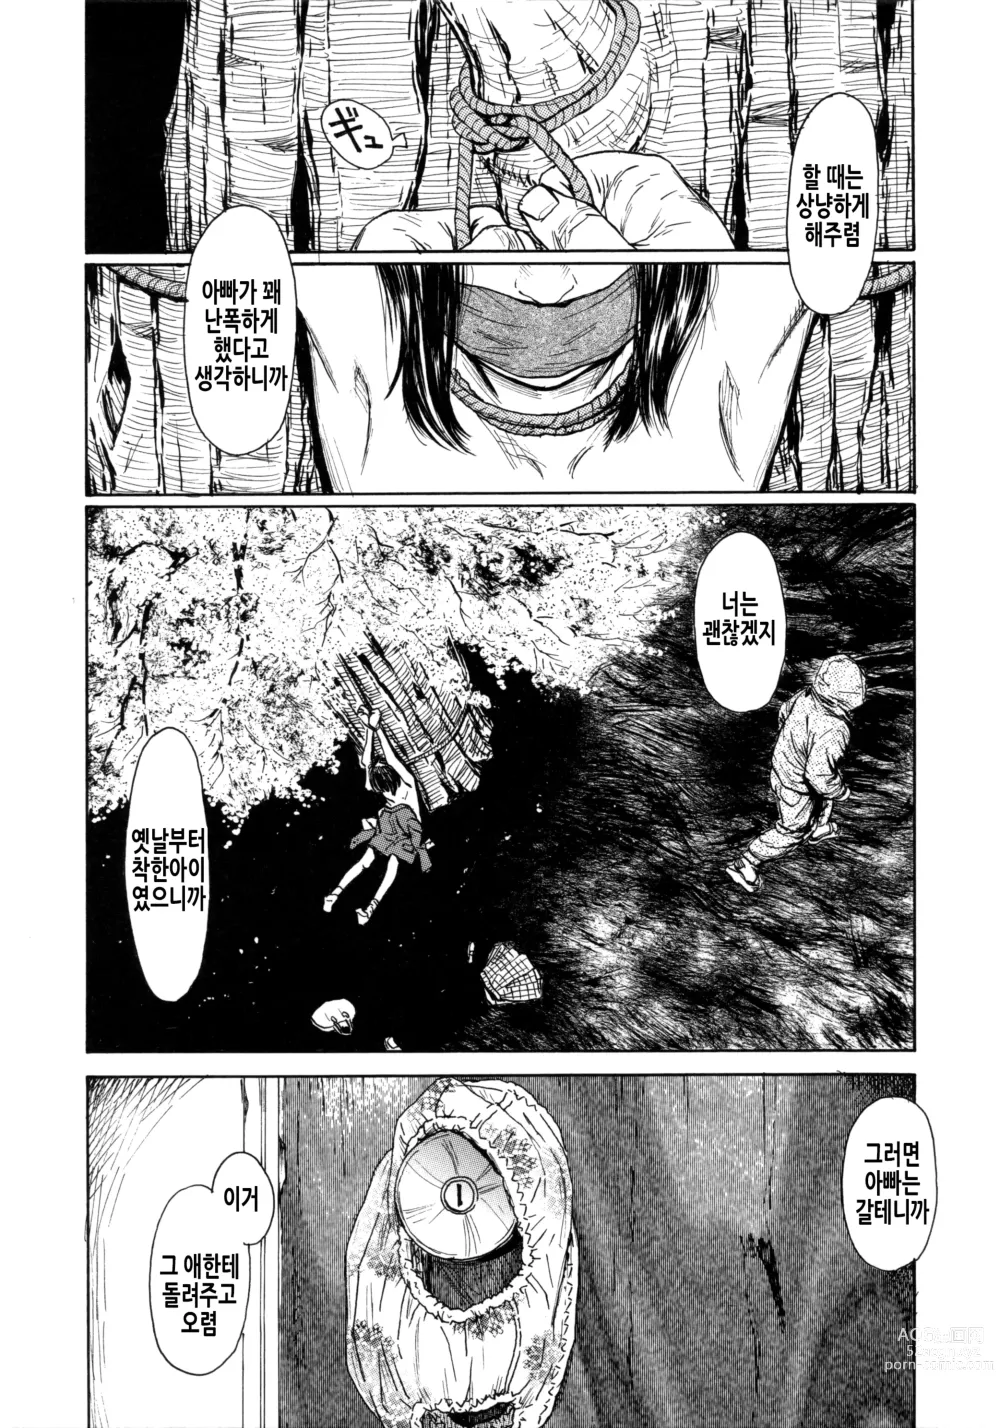 Page 209 of manga 소부 팔경